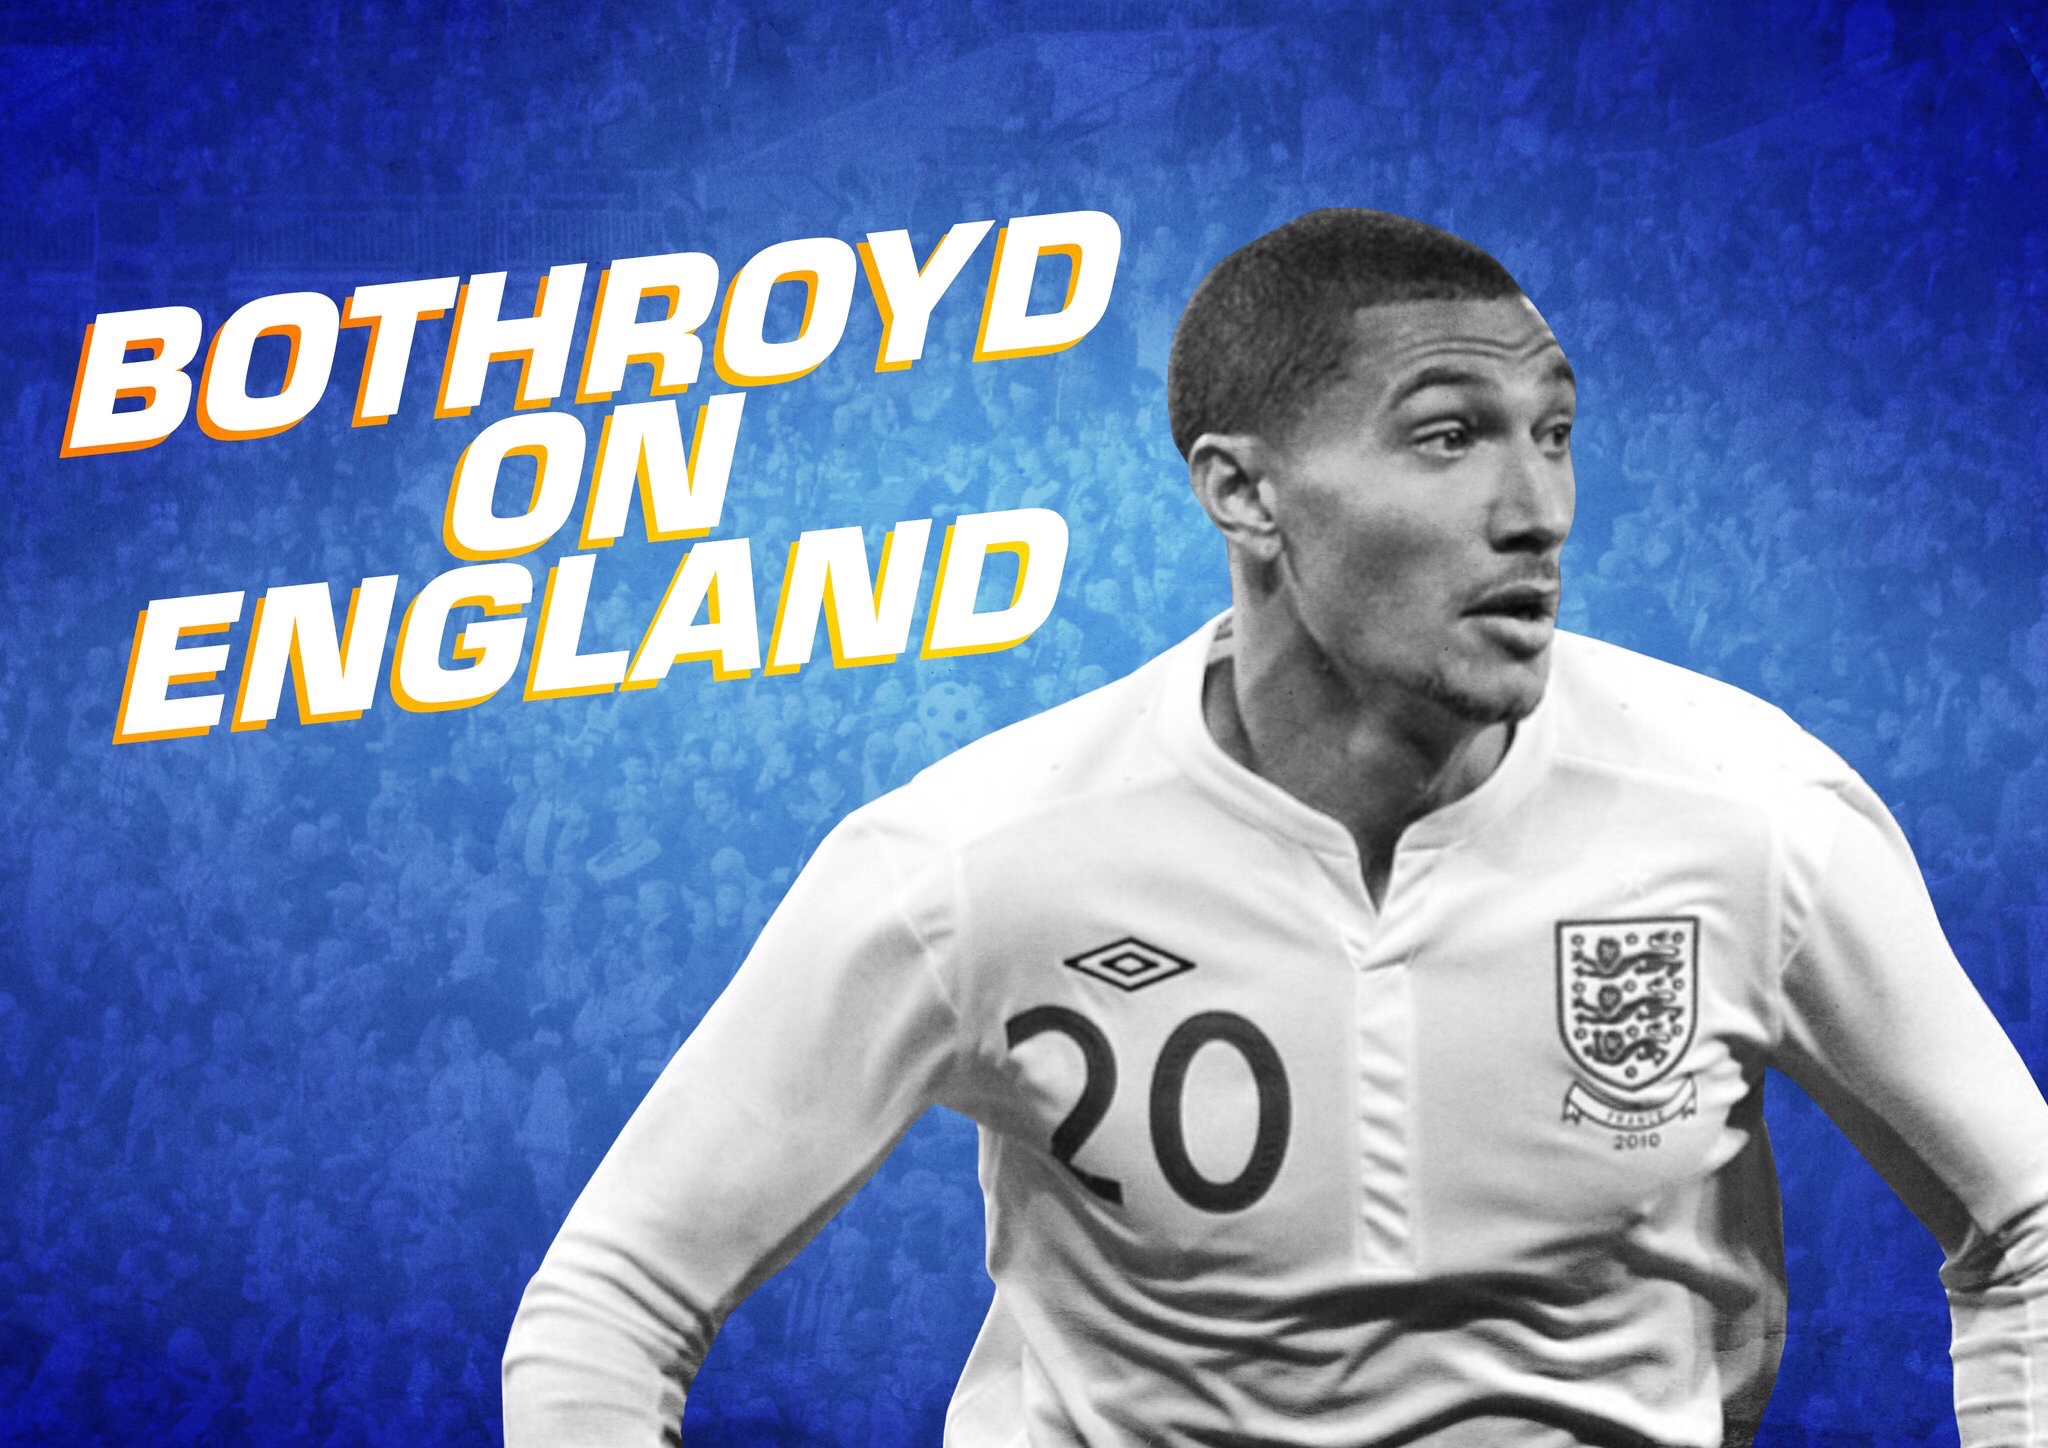 Bothroyd on England